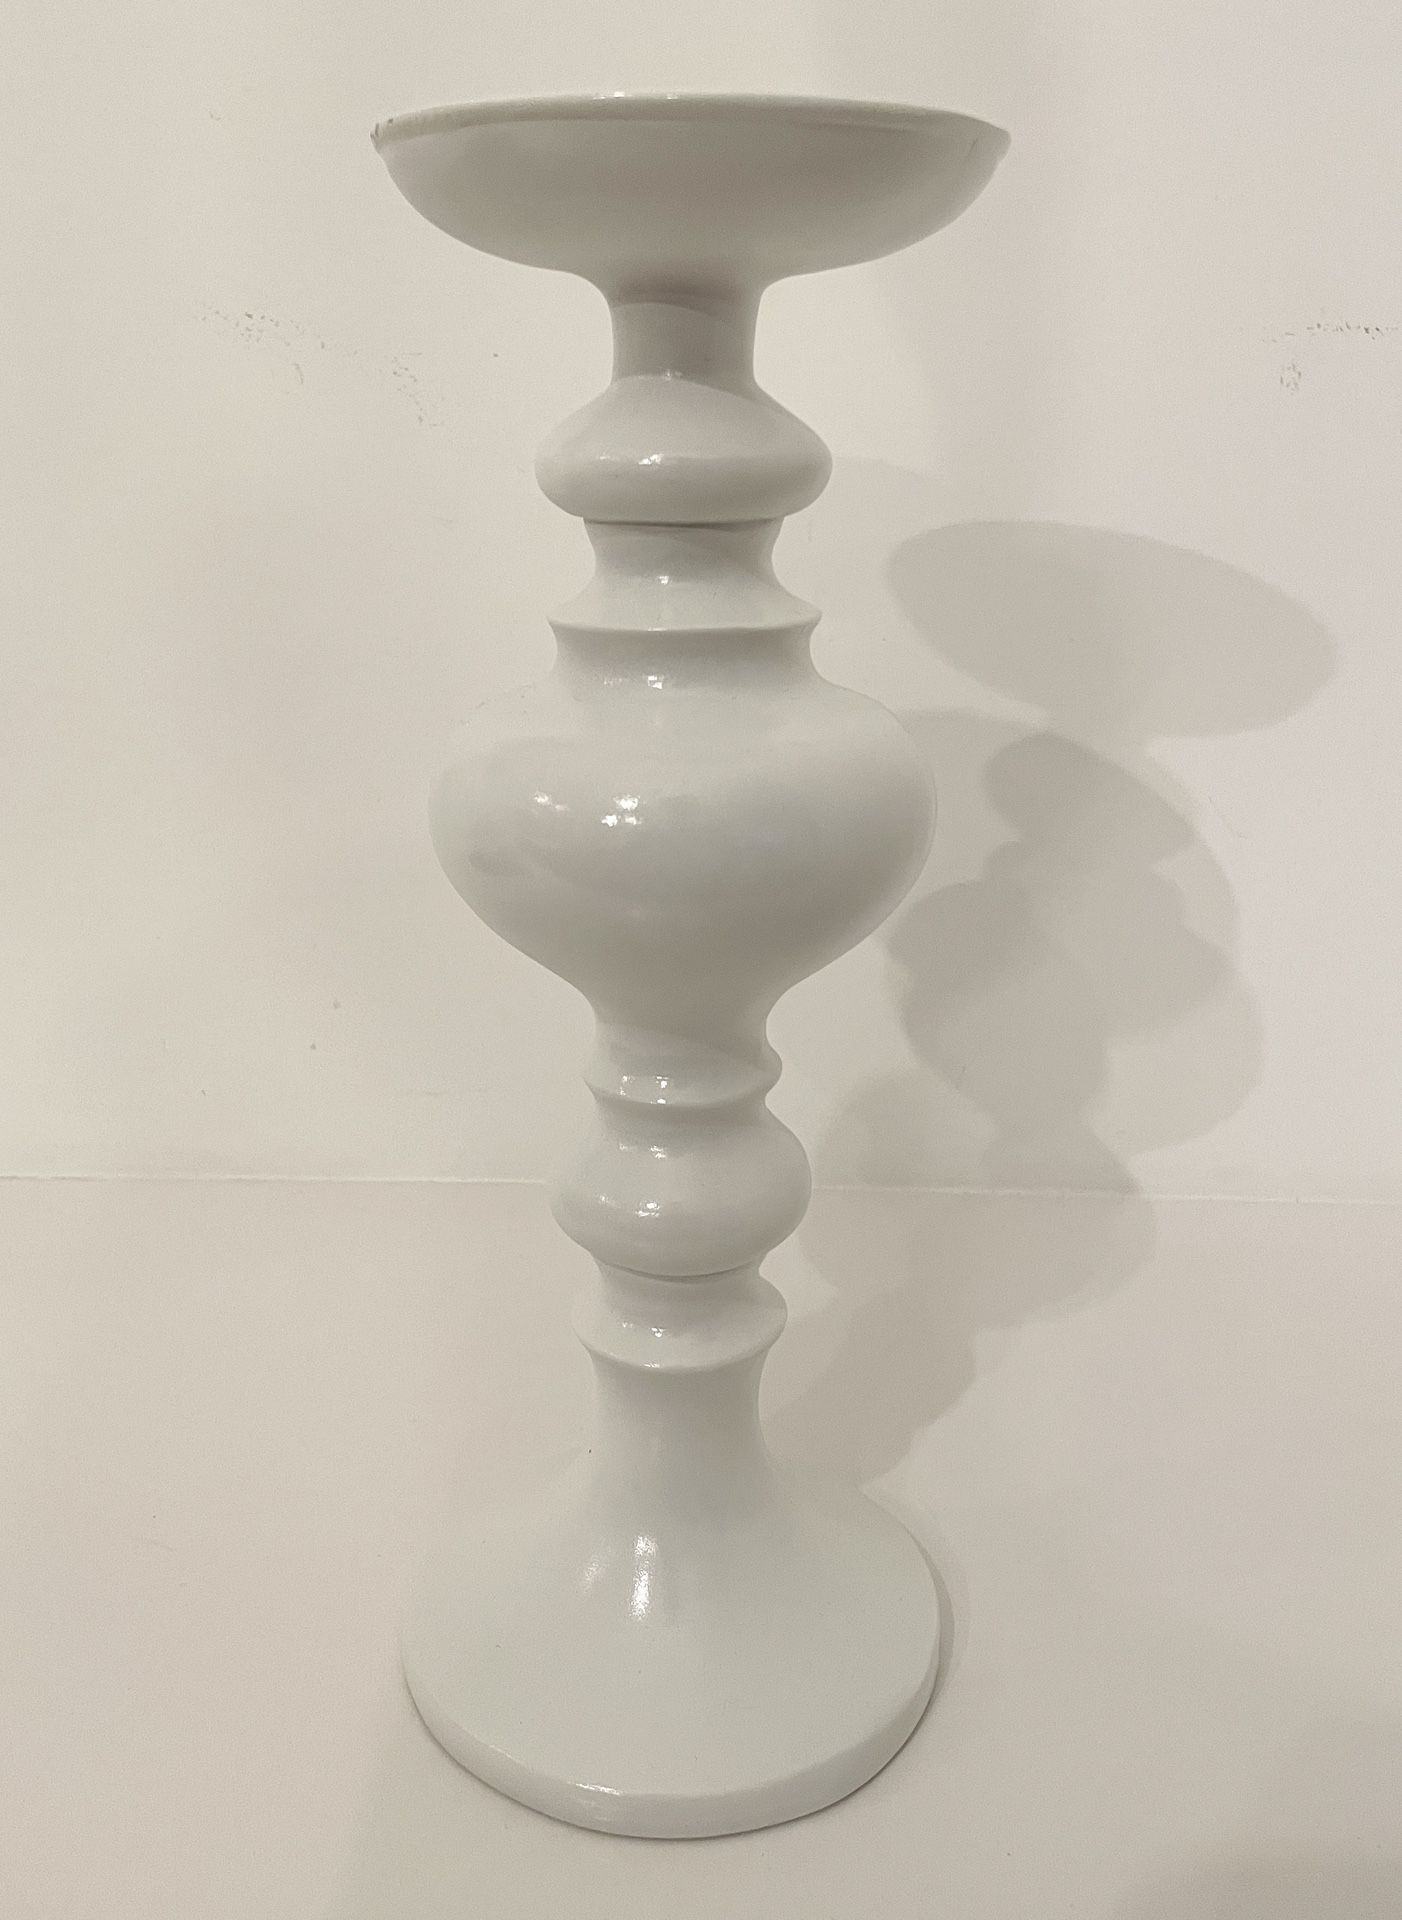 Large White Candleholder Pillar Holder Wooden - 11.5” tall x 4.5” base